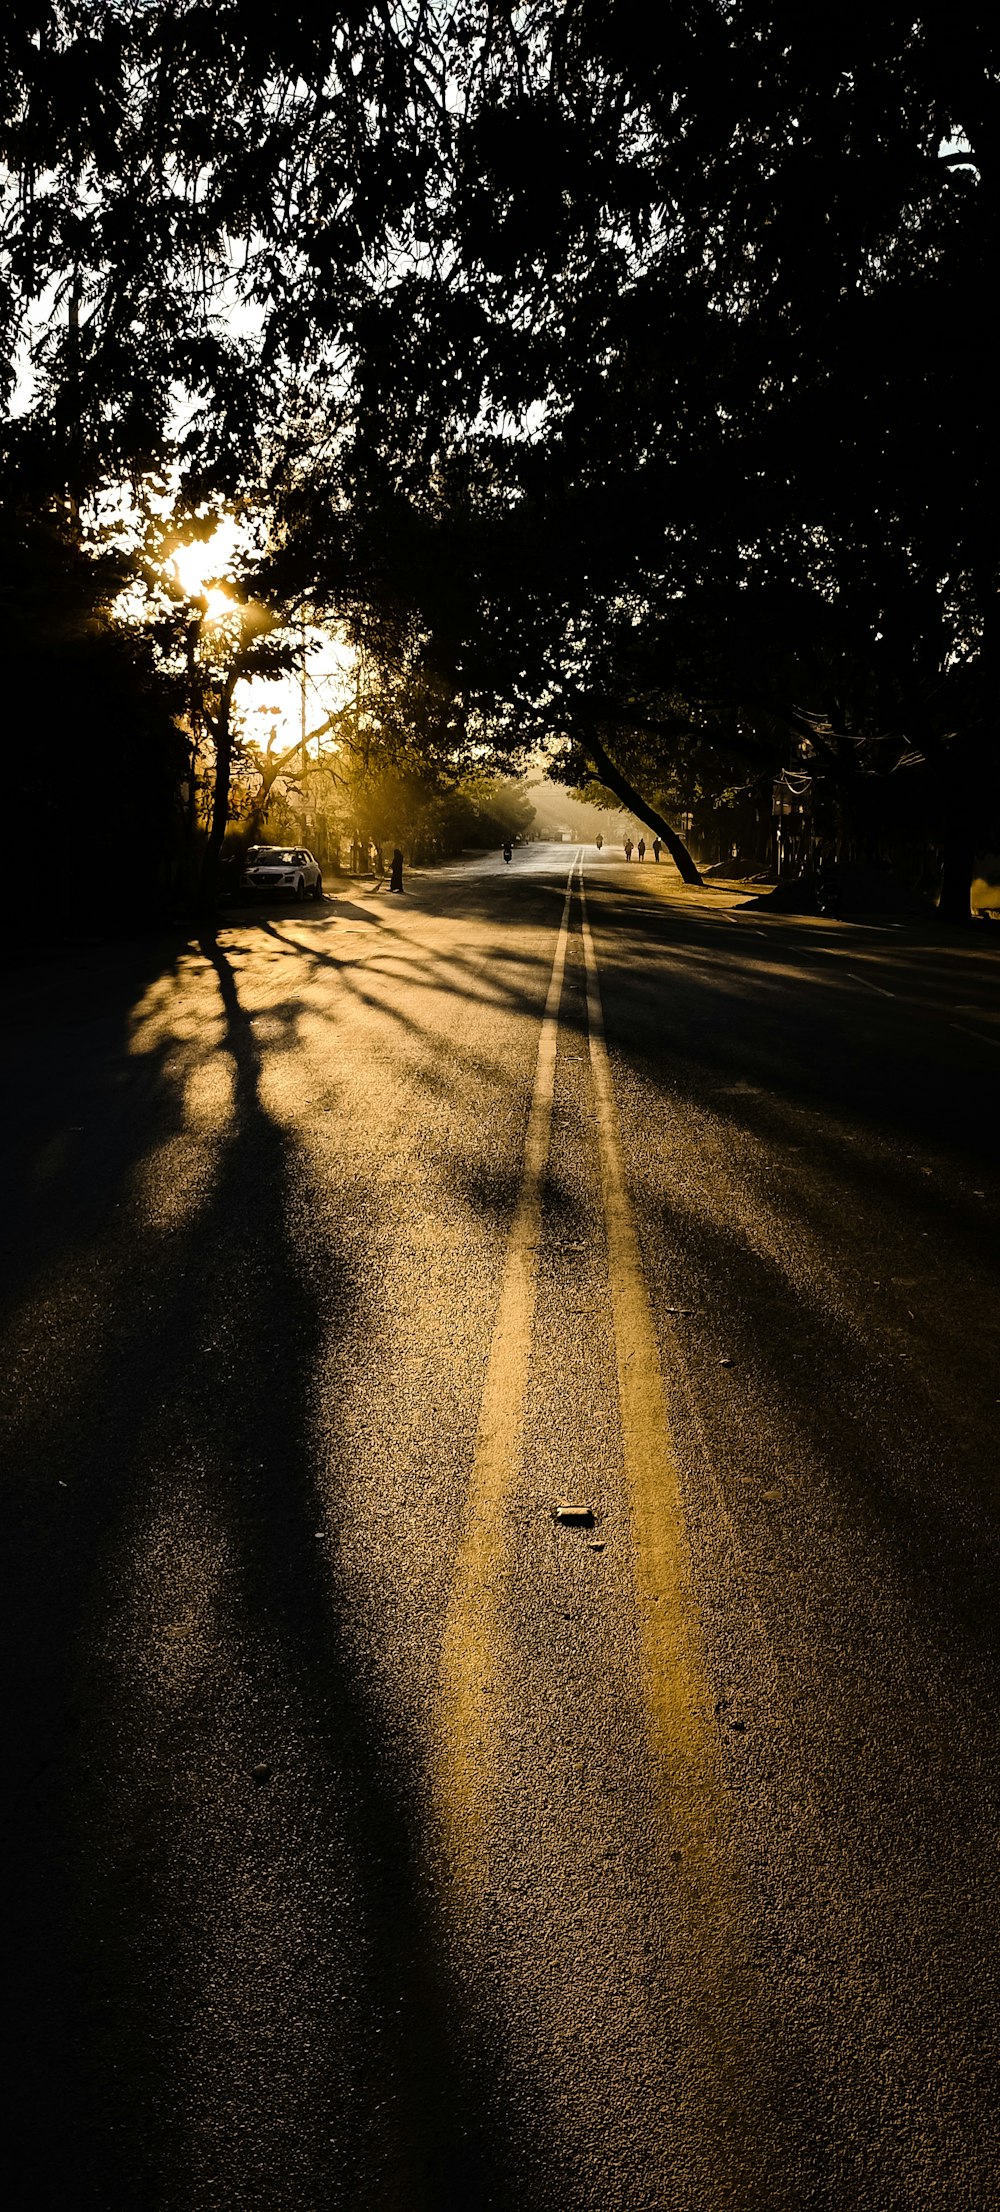 black asphalt road between trees during daytime